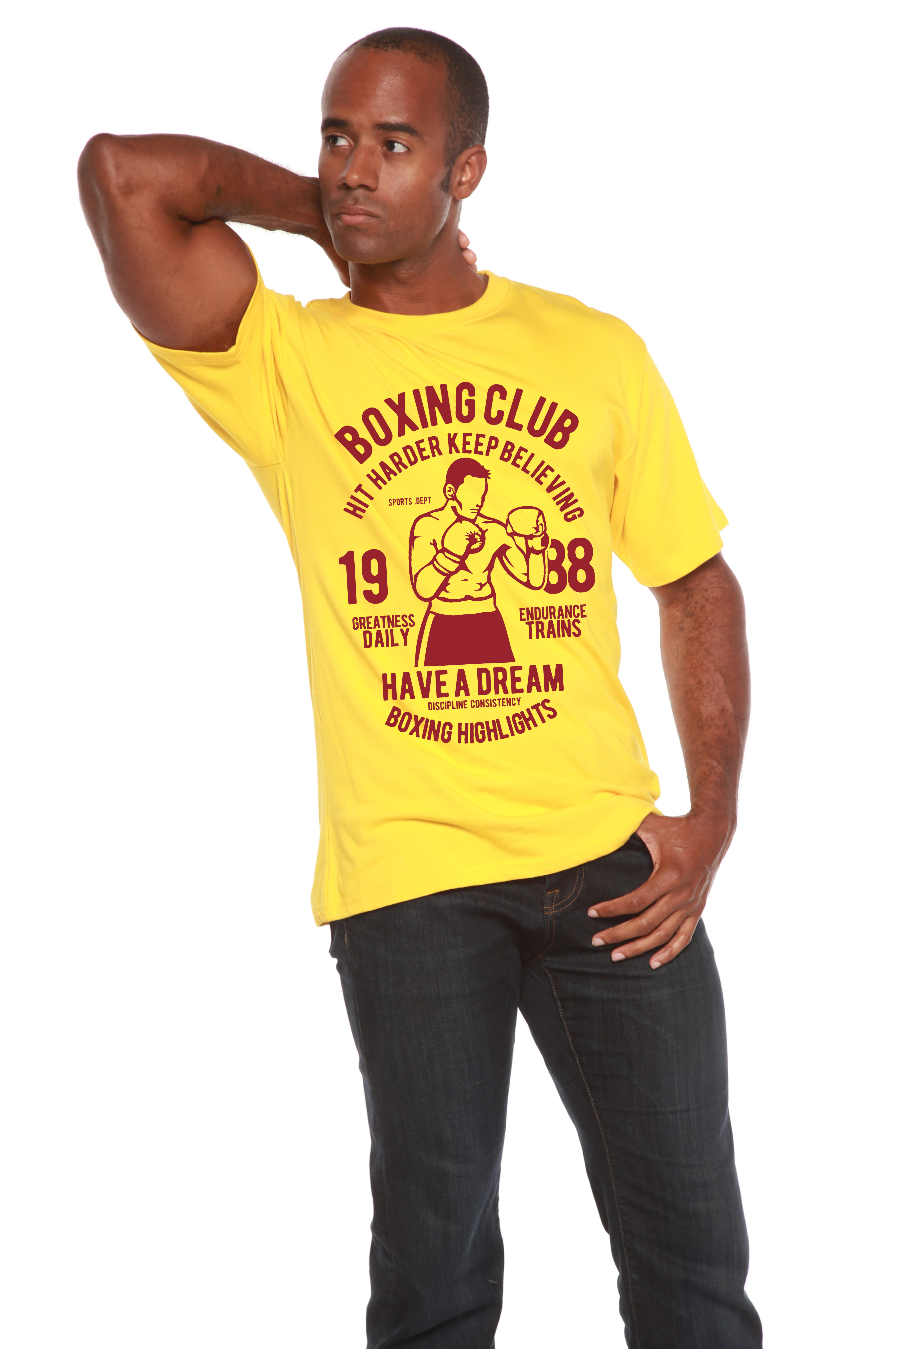 Boxing Club Men's Bamboo Viscose/Organic Cotton Short Sleeve T-Shirt - Spun Bamboo